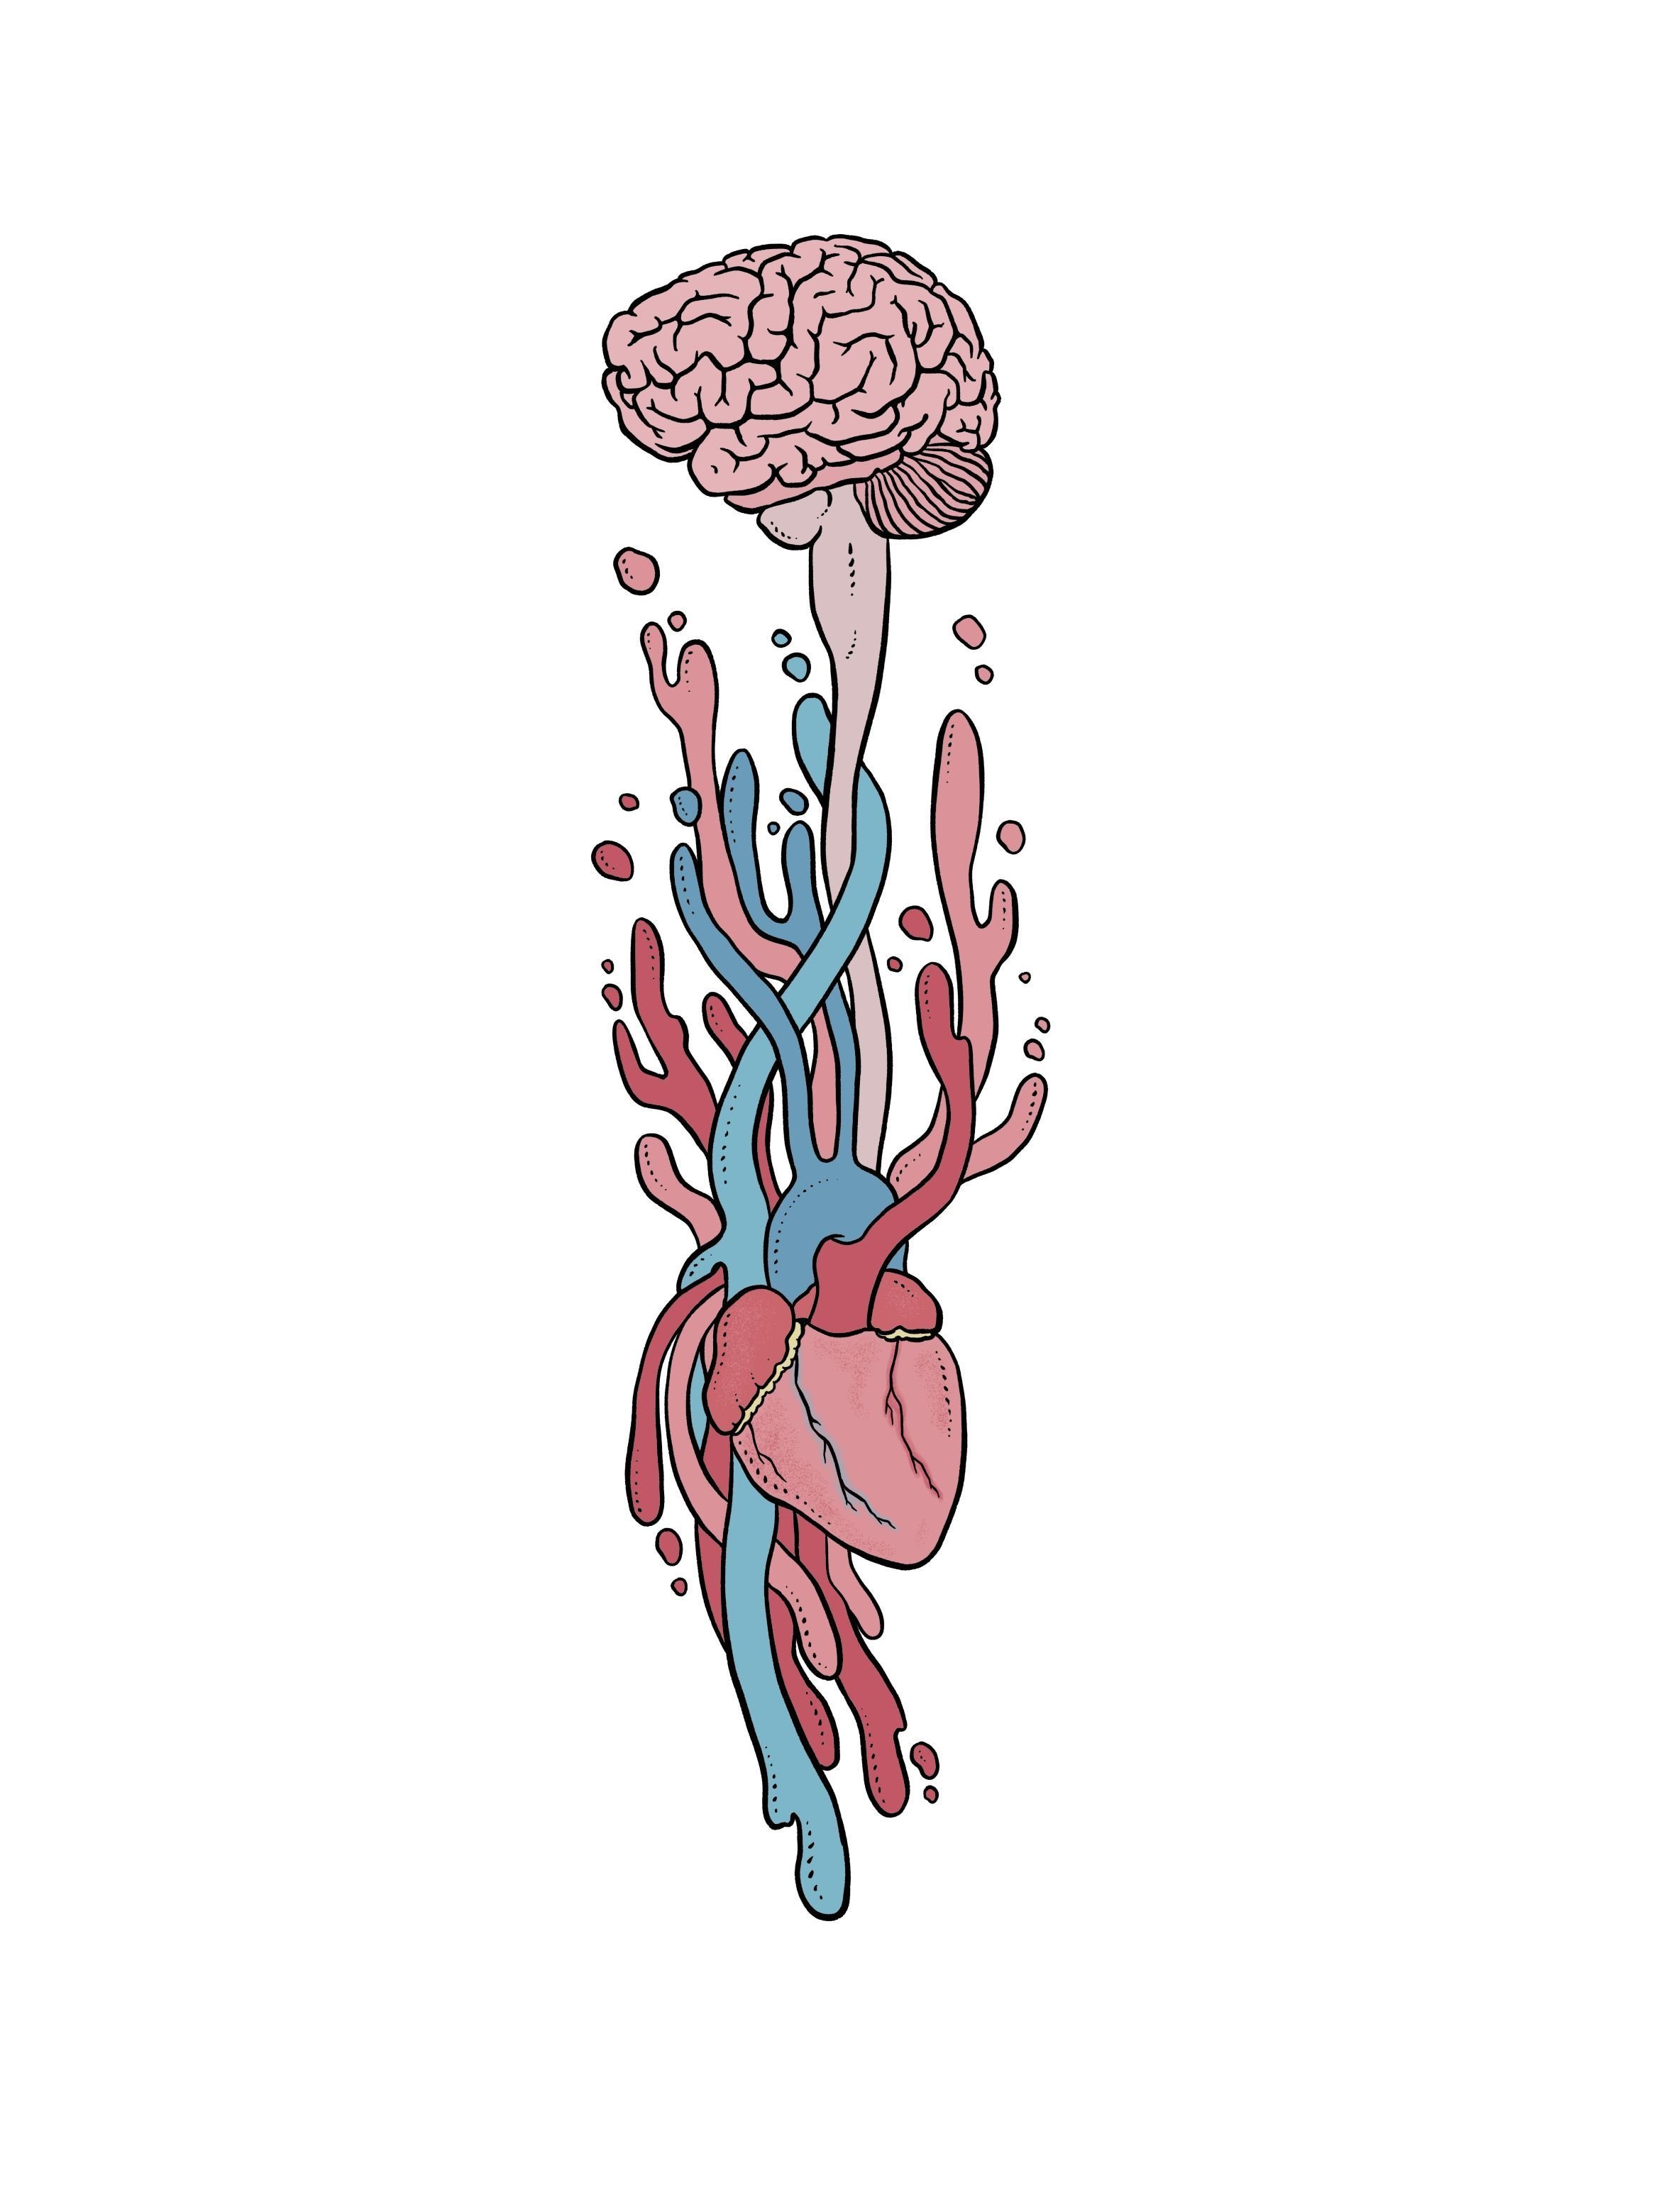 Brain 63. Мозг арт. Мозг эскиз. Мозг нарисованный. Мозг человека арт.